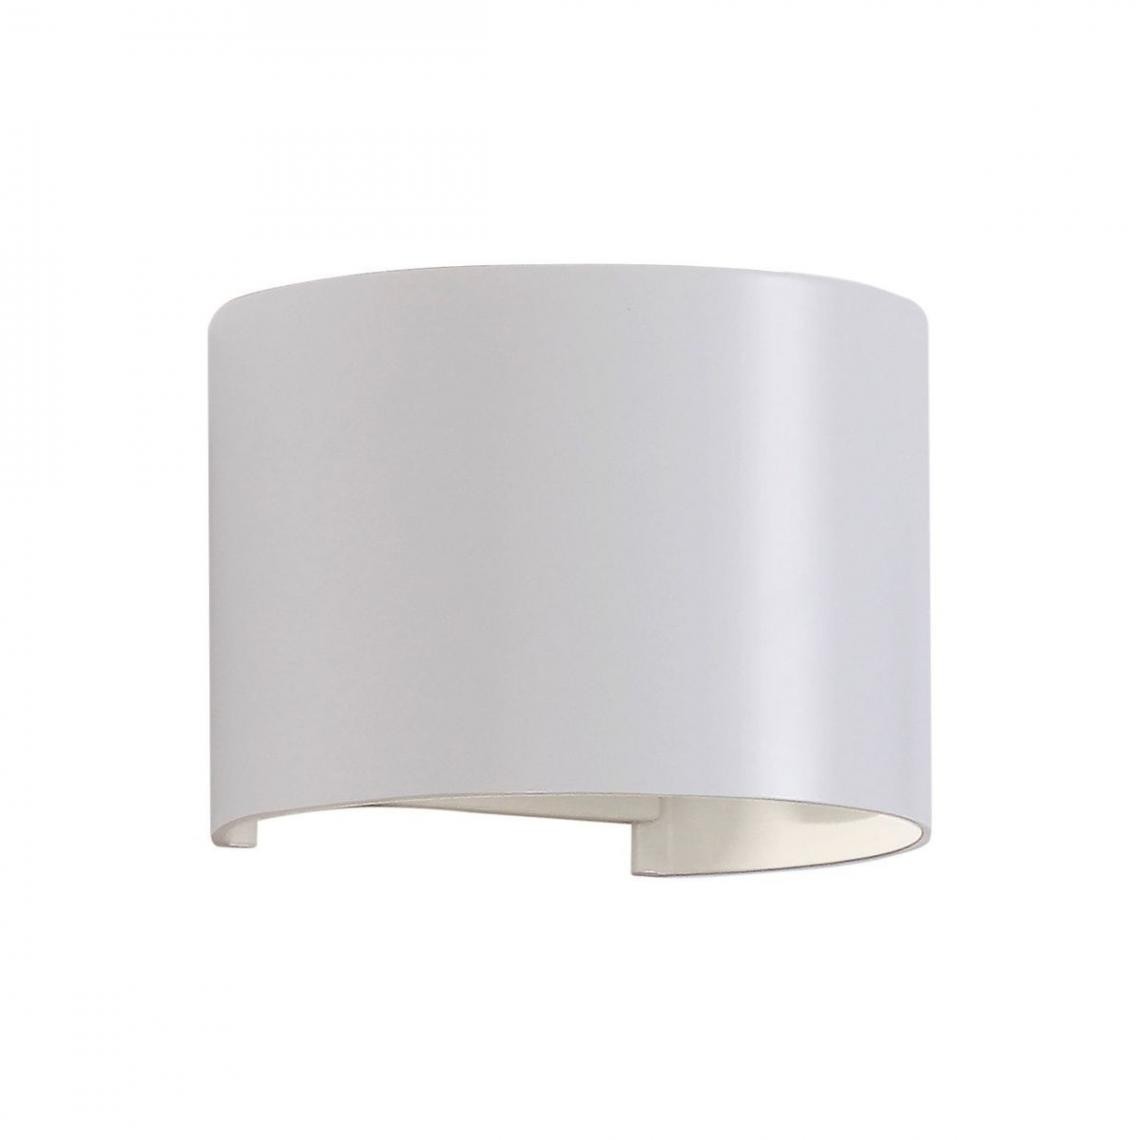 Acb - Applique Kowa 2x6W LED Blanc - Applique, hublot